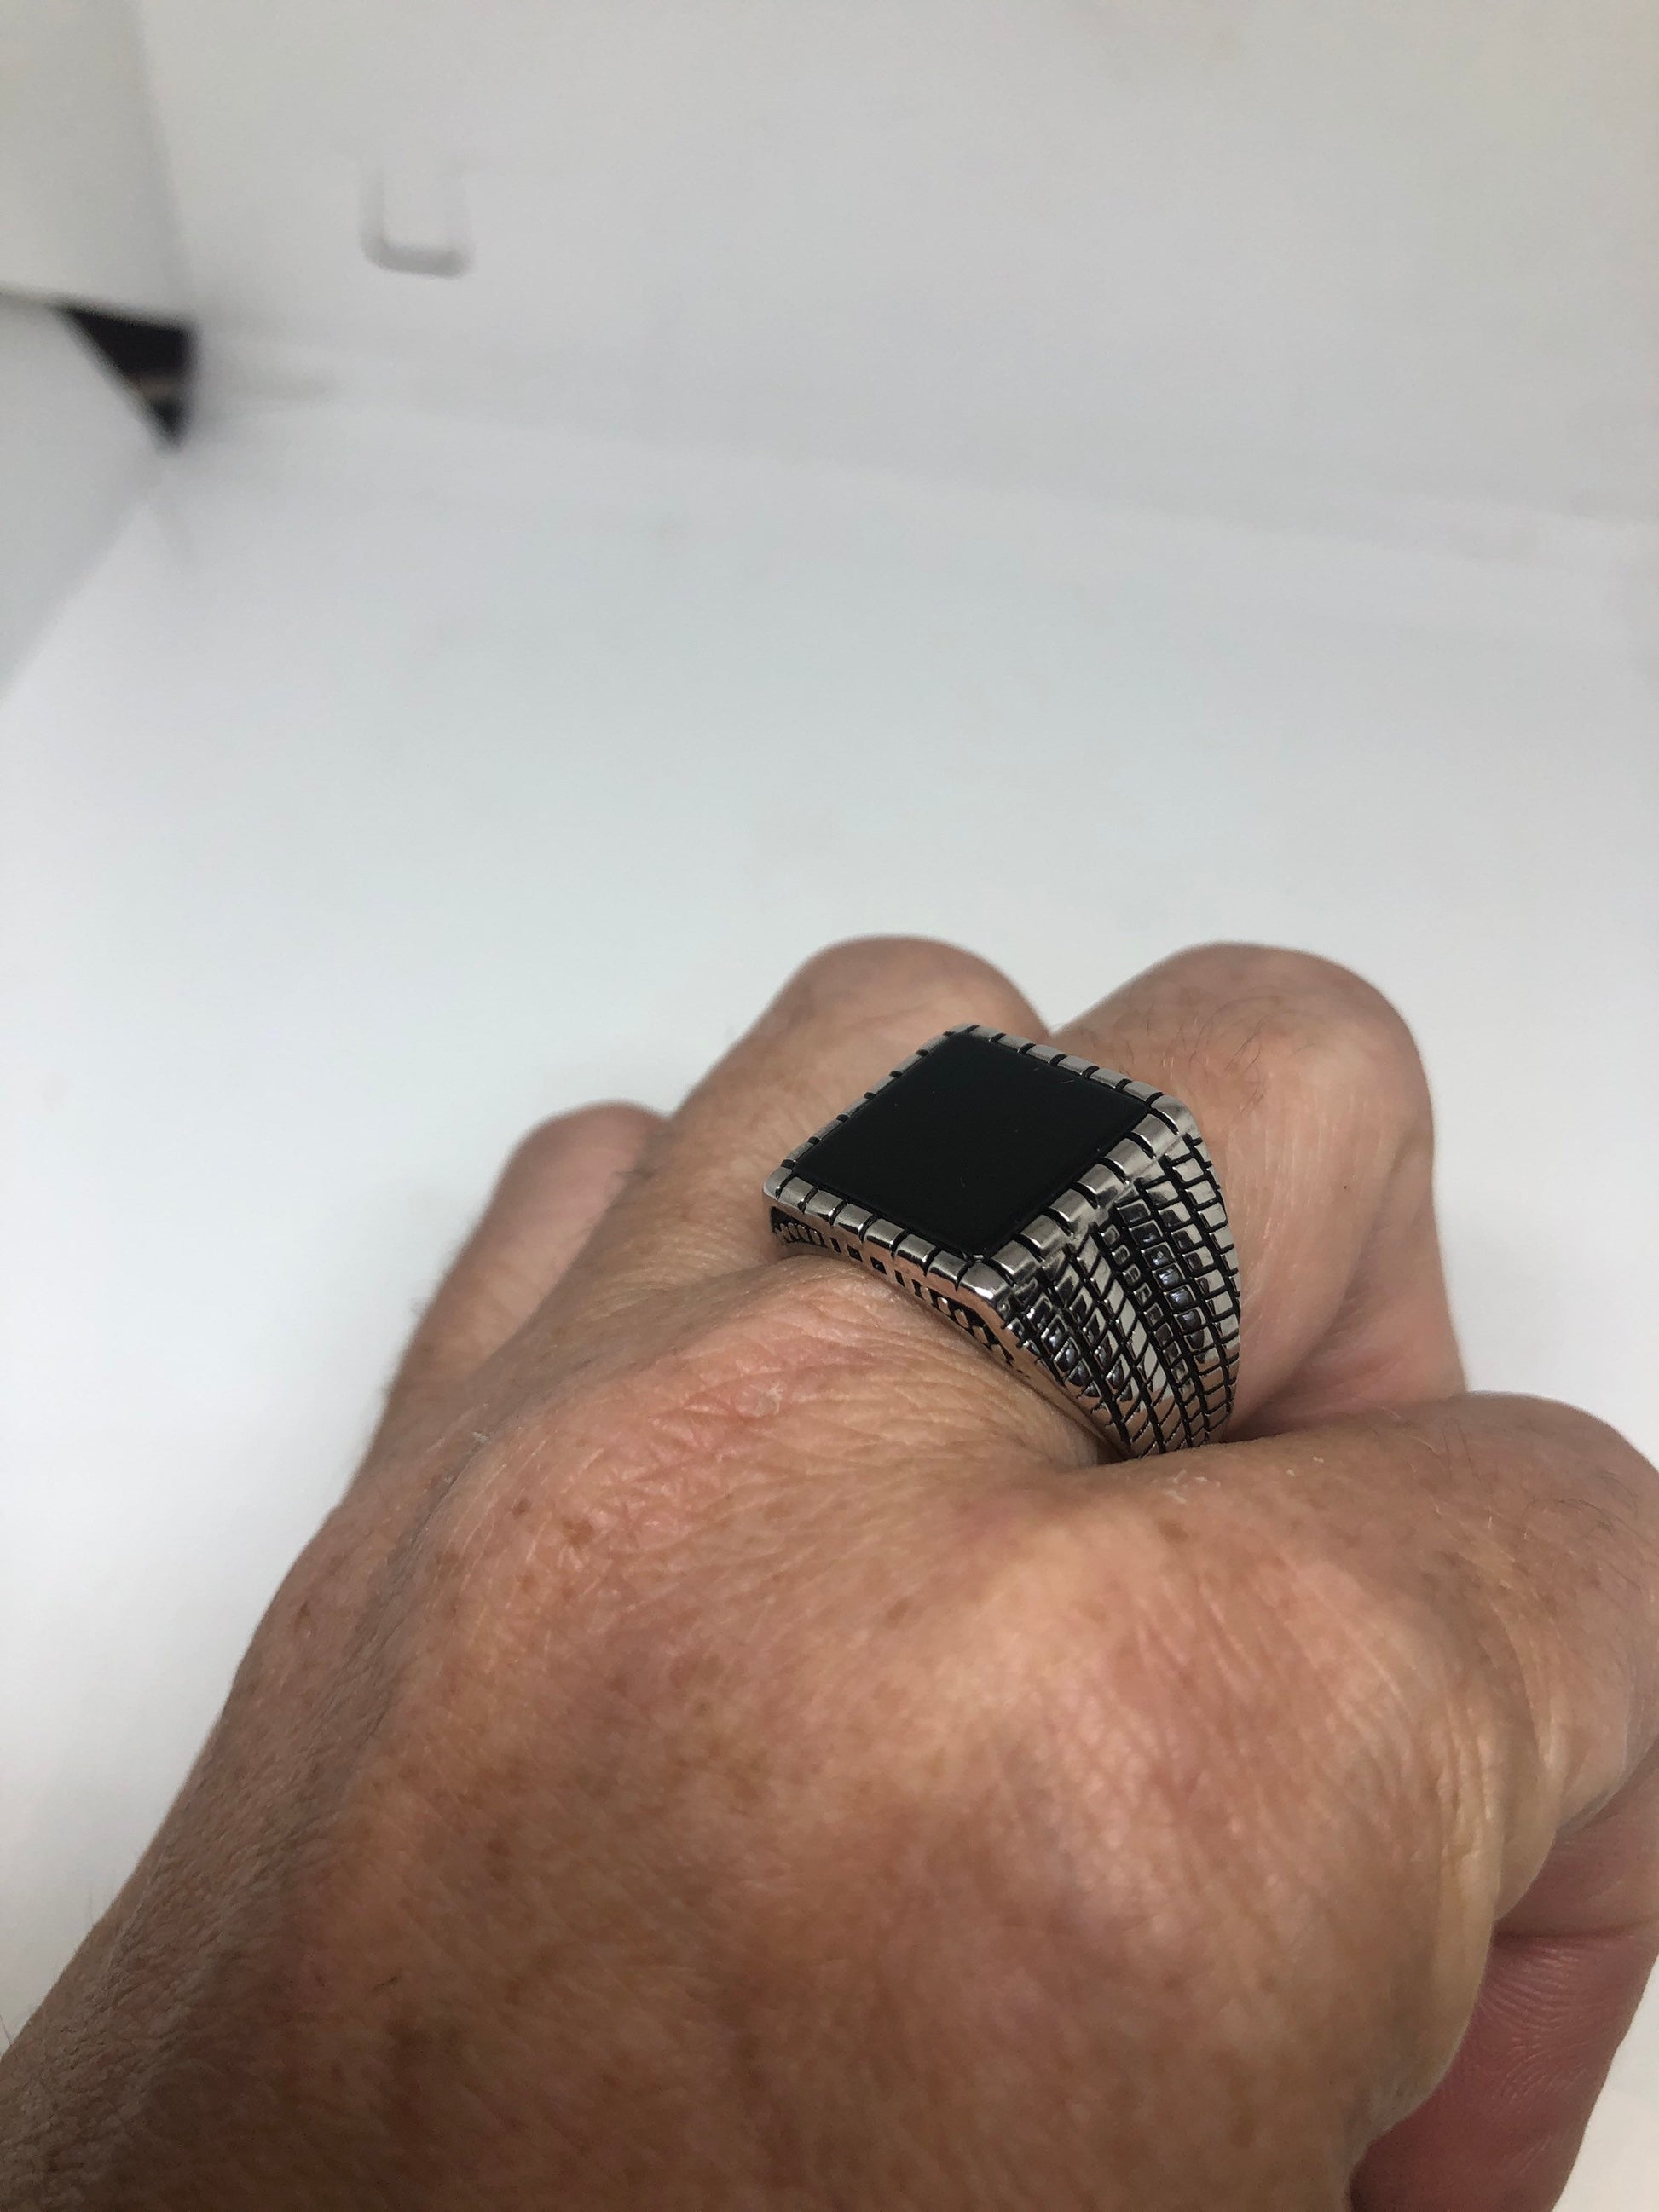 Vintage Gothic 925 Sterling Silver Genuine Black Onyx Mens Ring